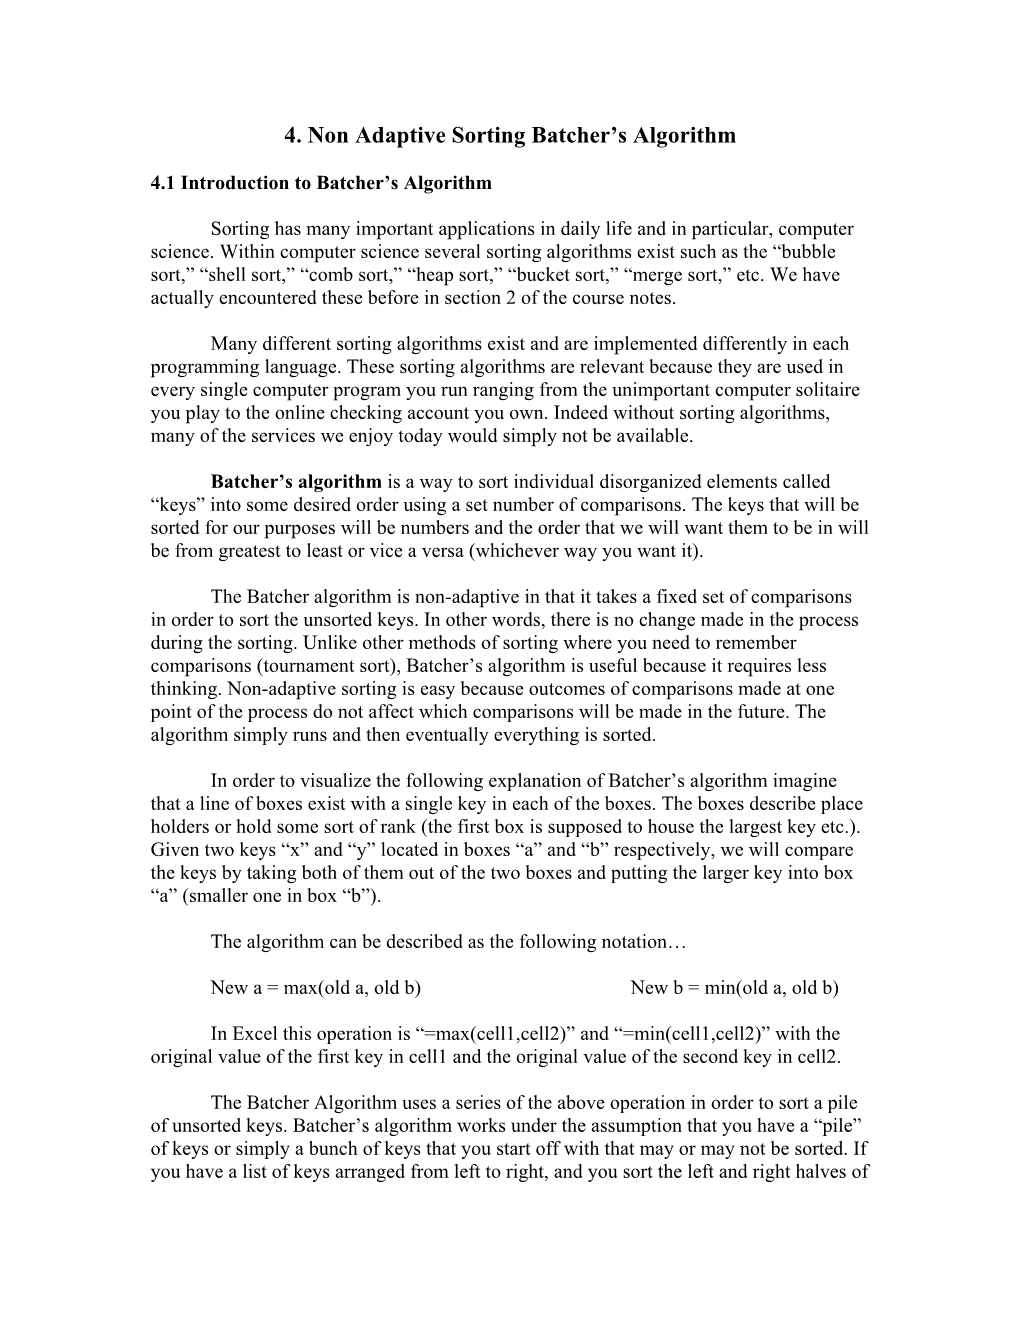 Coursenotes 4 Non-Adaptive Sorting Batcher's Algorithm